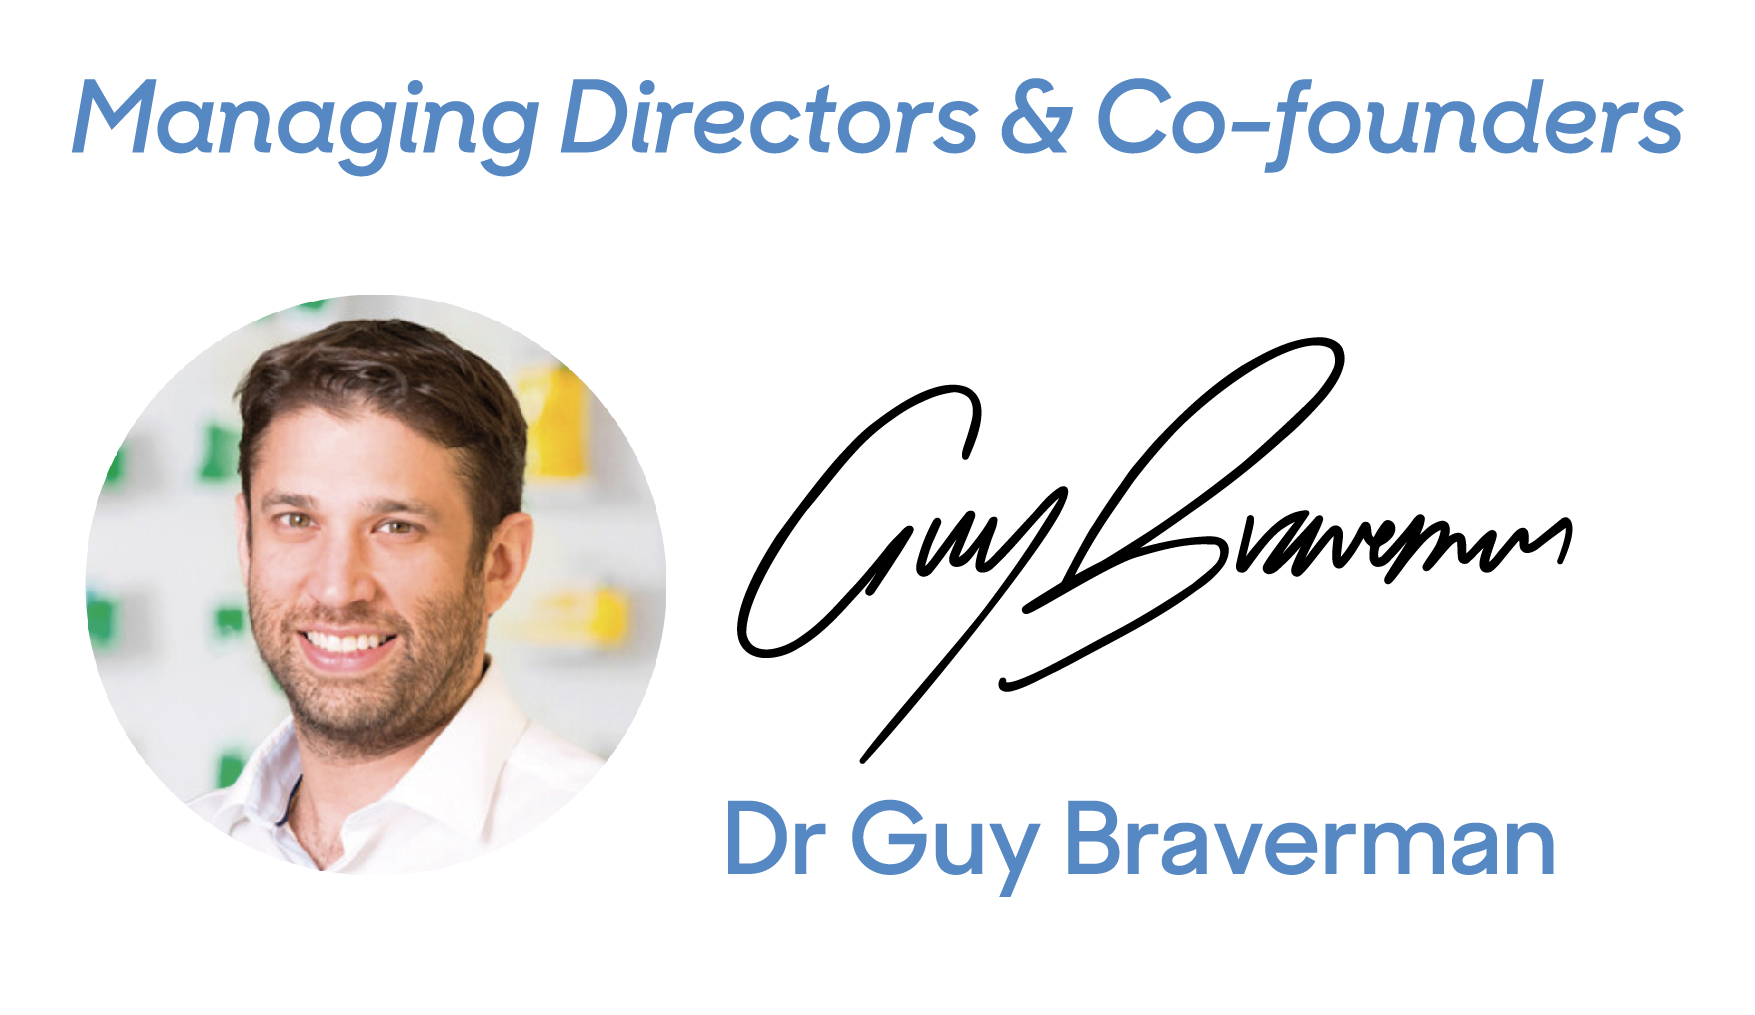 Dr Guy Braverman Headshot & sig